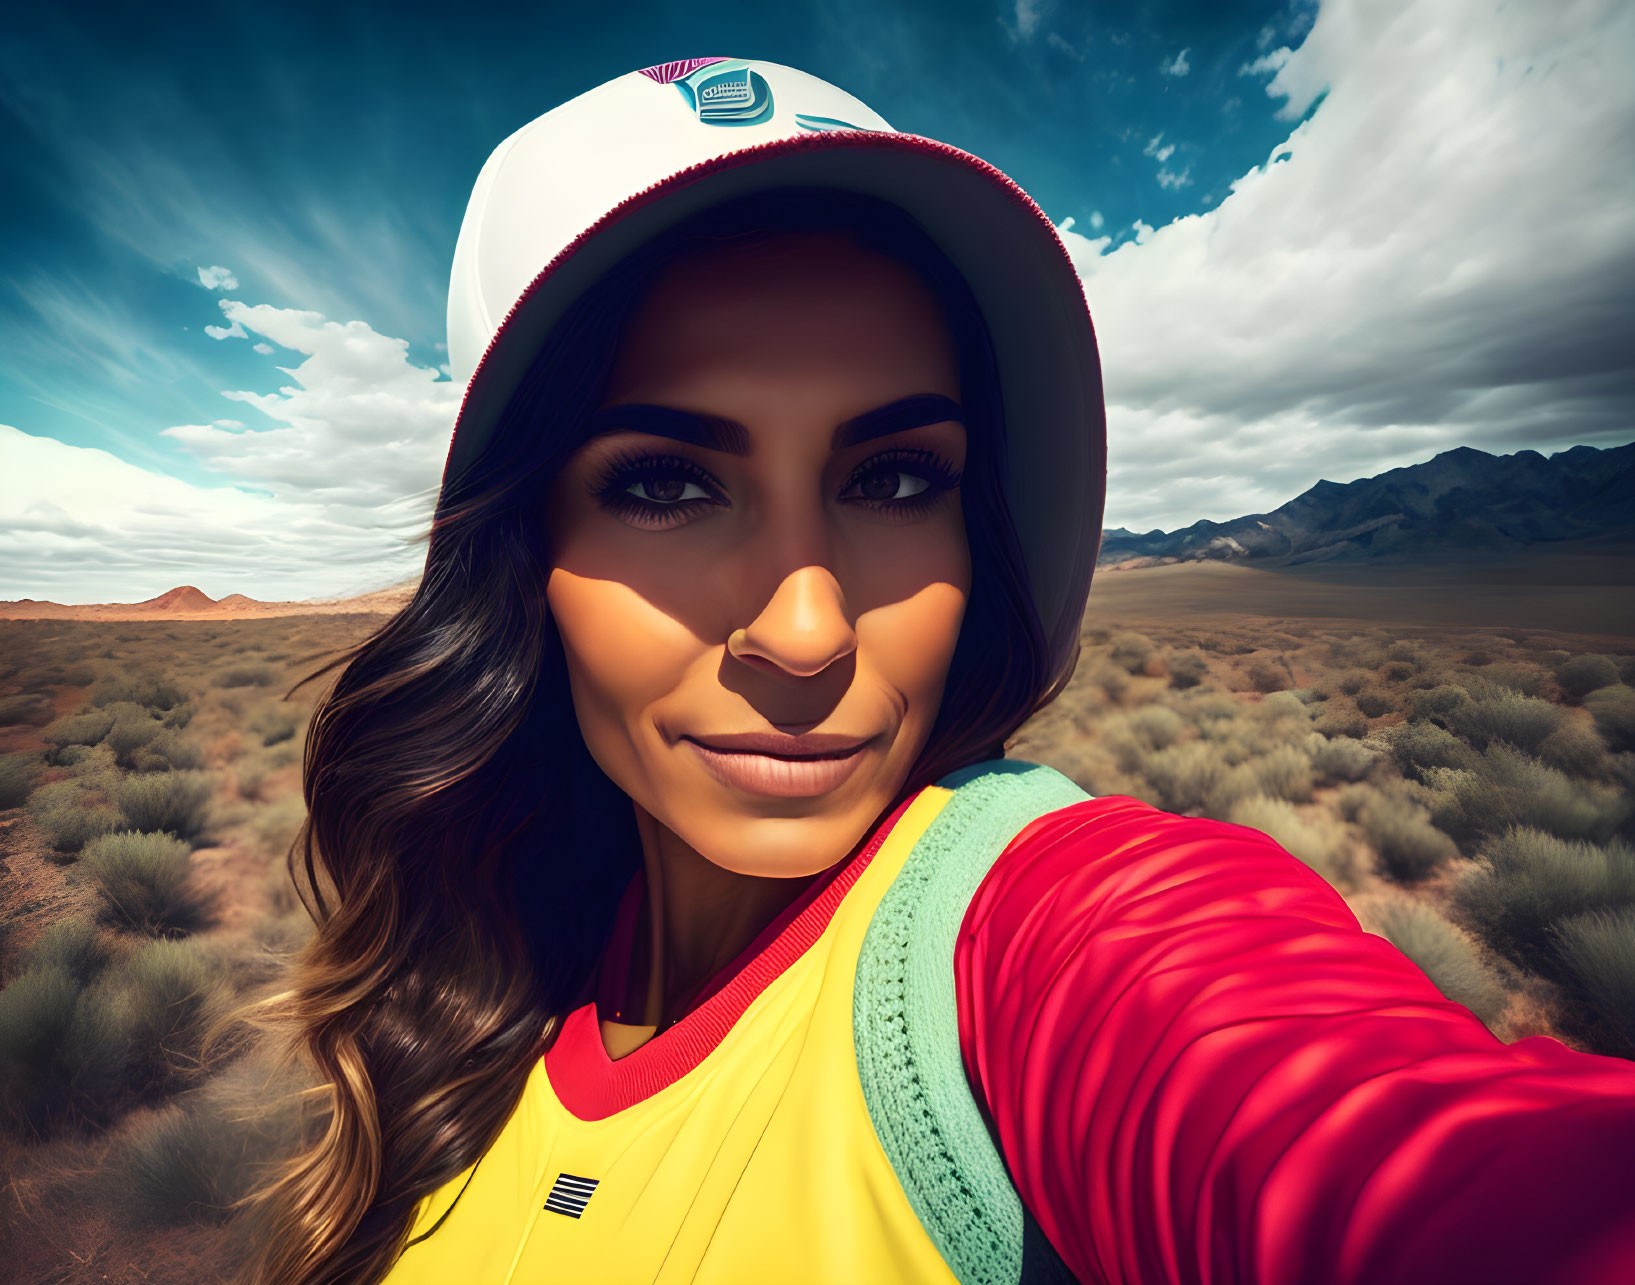 Smiling woman in cap takes selfie in desert landscape